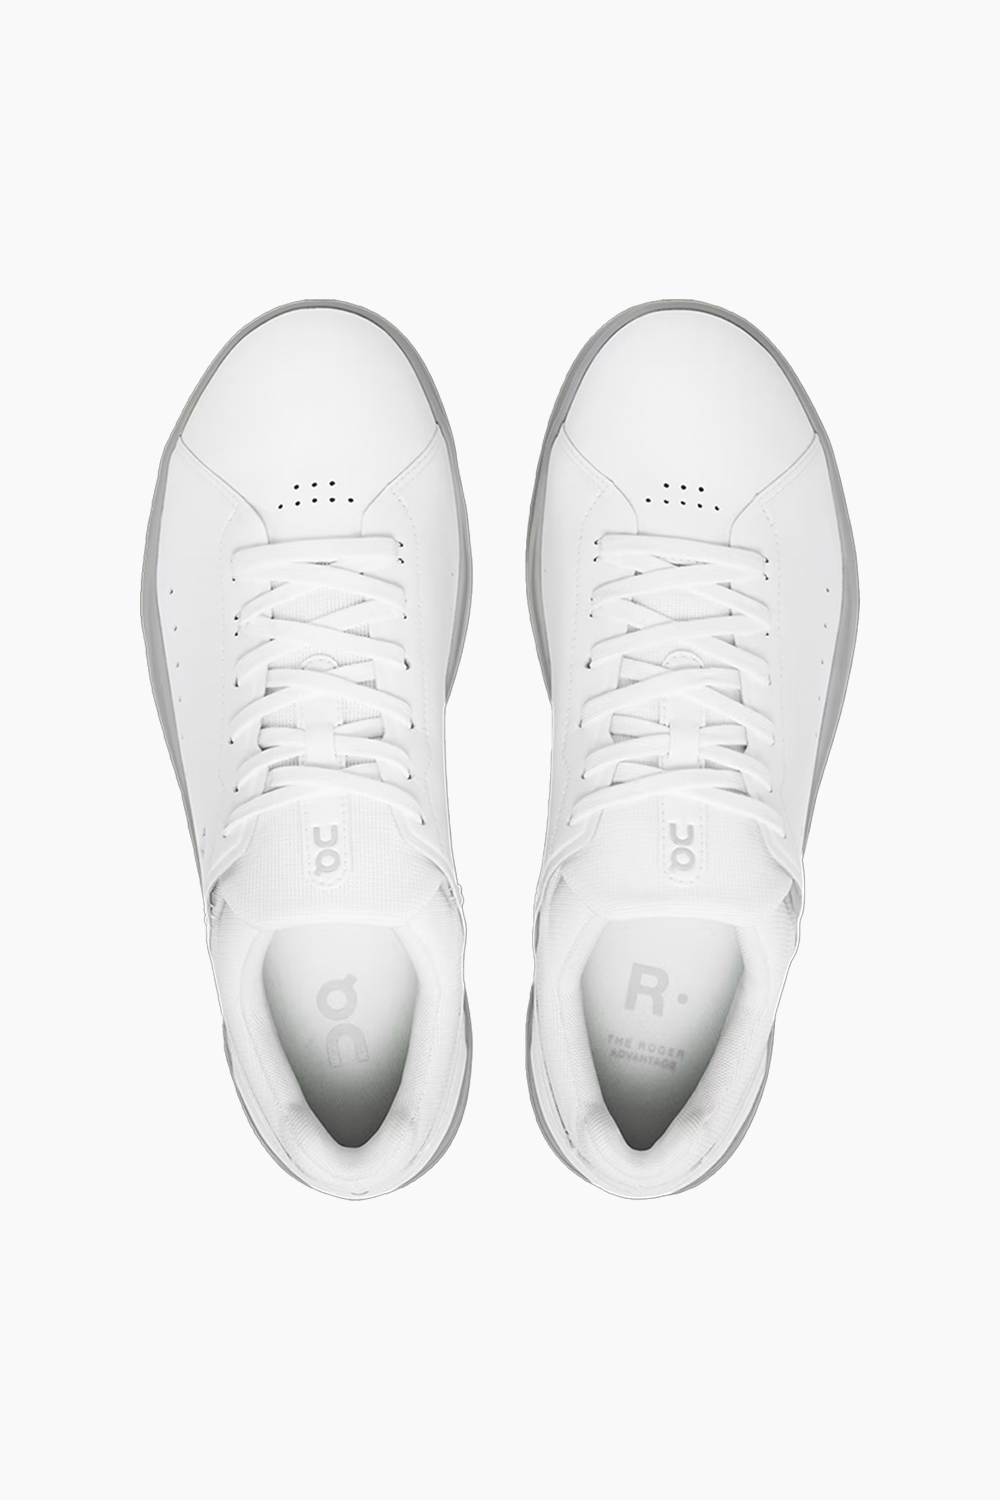 ON | Men's The Roger Advantage Sneaker in White/Alloy